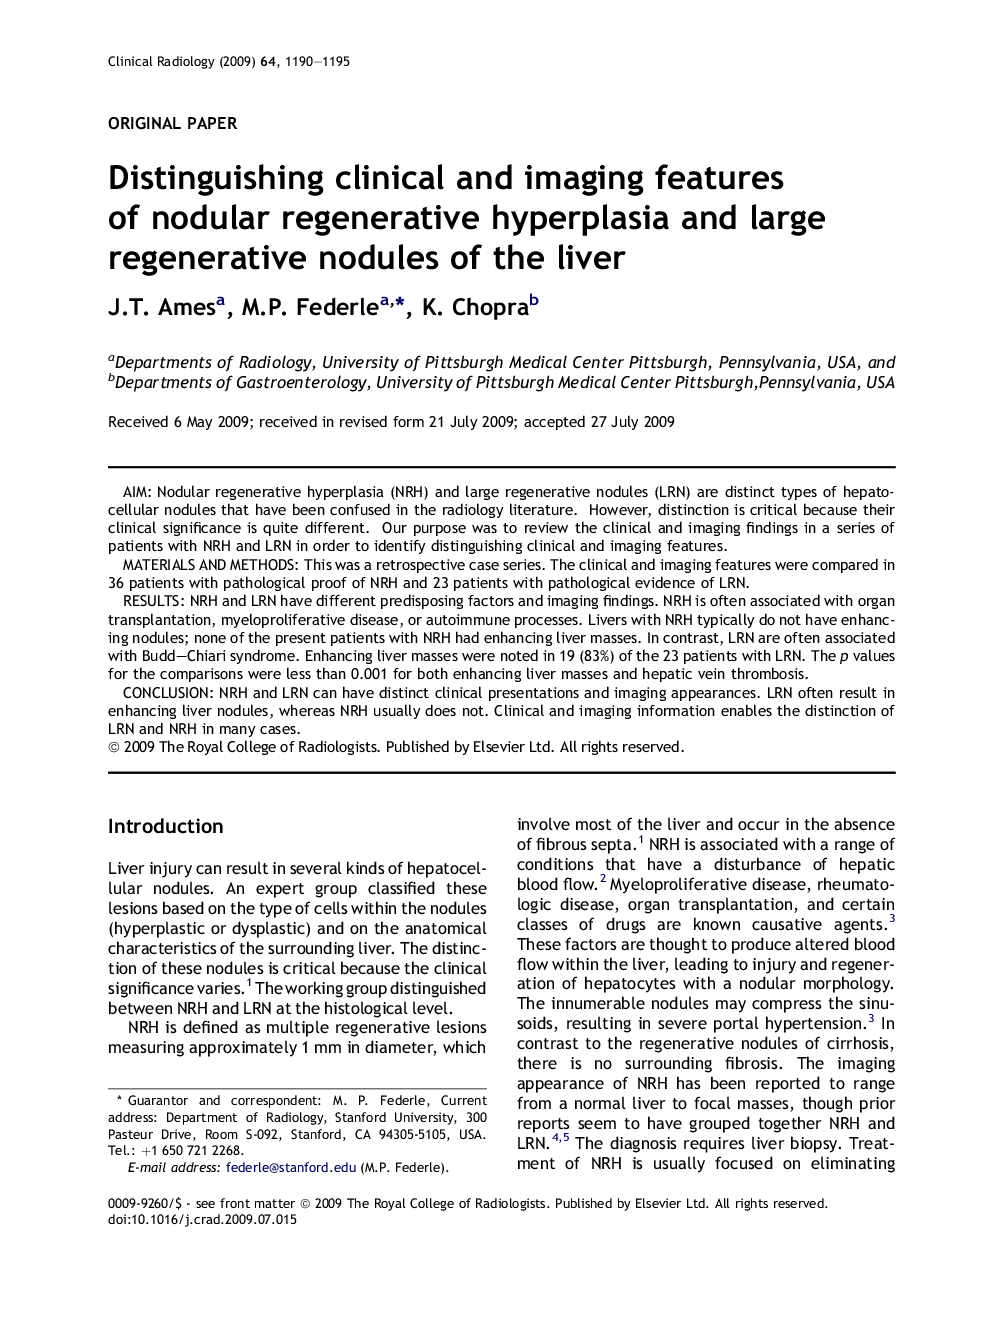 Distinguishing clinical and imaging features of nodular regenerative hyperplasia and large regenerative nodules of the liver